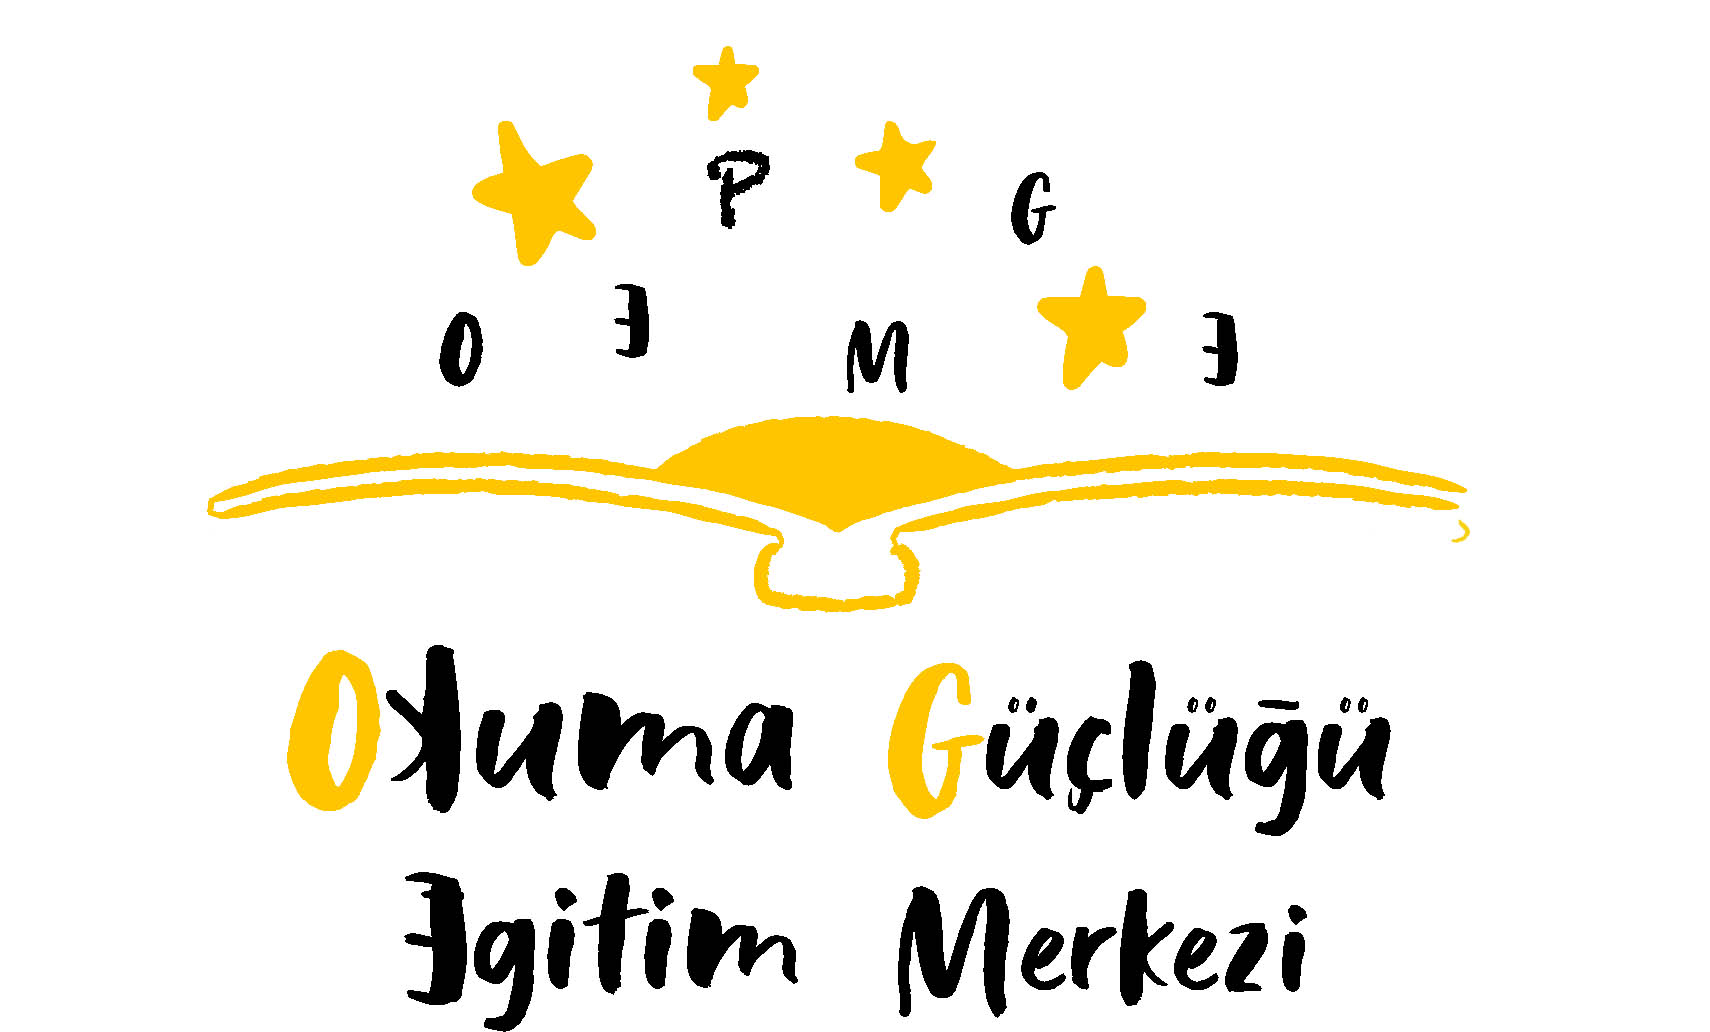 Okuma Güçlüğü Eğitim Merkezi Logo